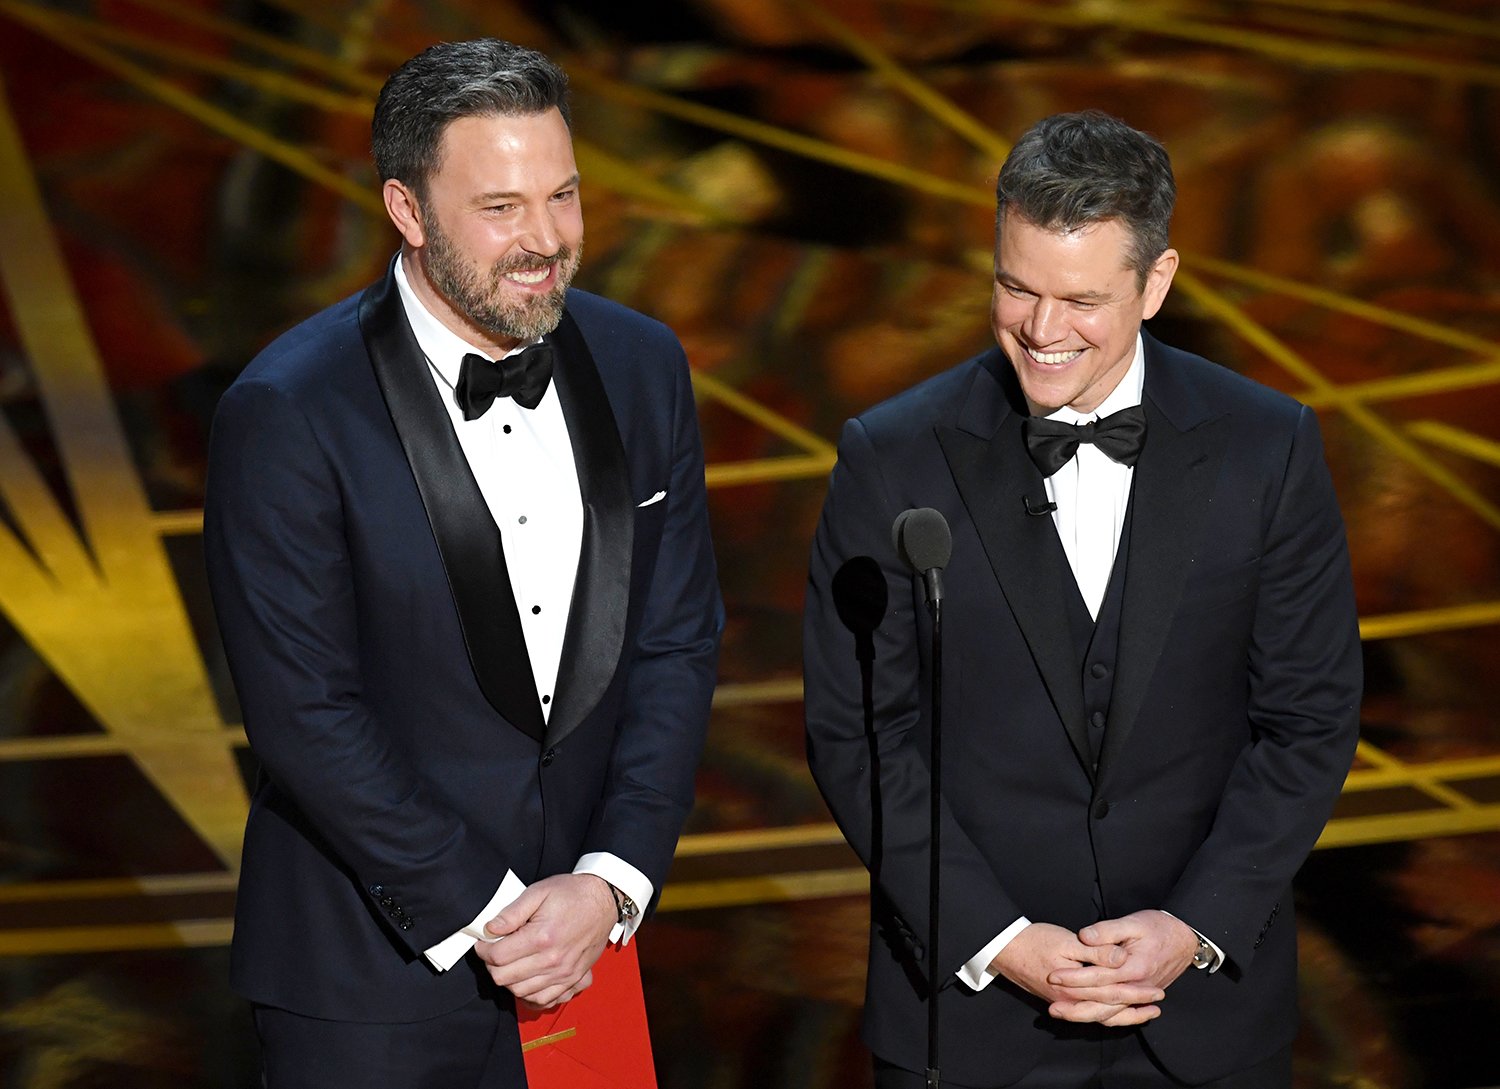 Ben Affleck and Matt Damon at the 89th Annual Academy Awards